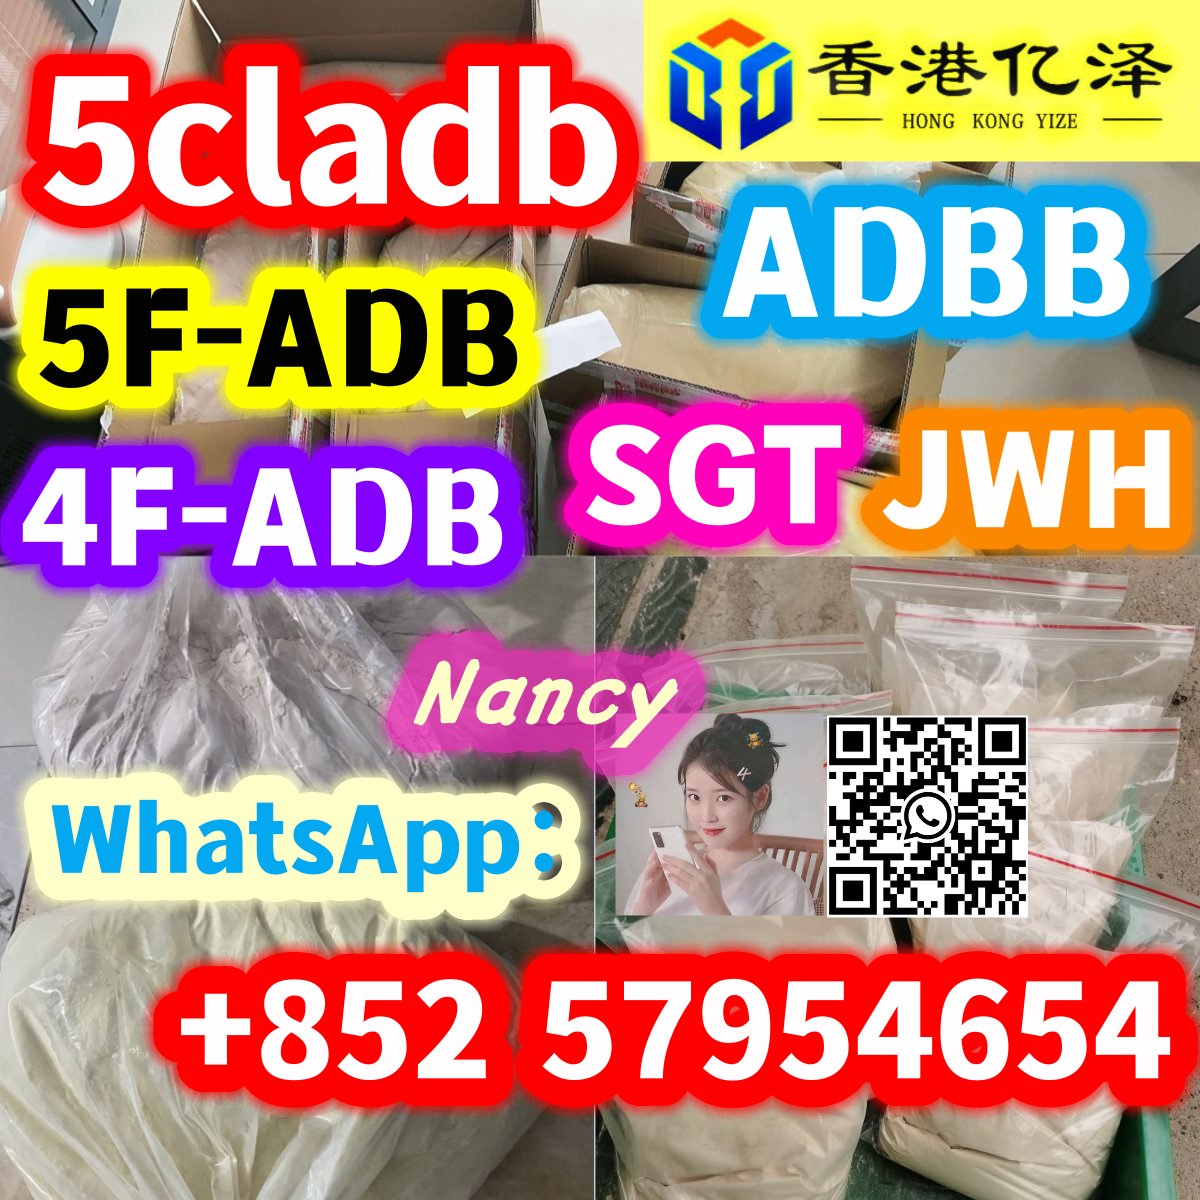 5F-AB-PINACA,5F-ADB,5cladb,5cladba,5cladbb,adbb，precursor